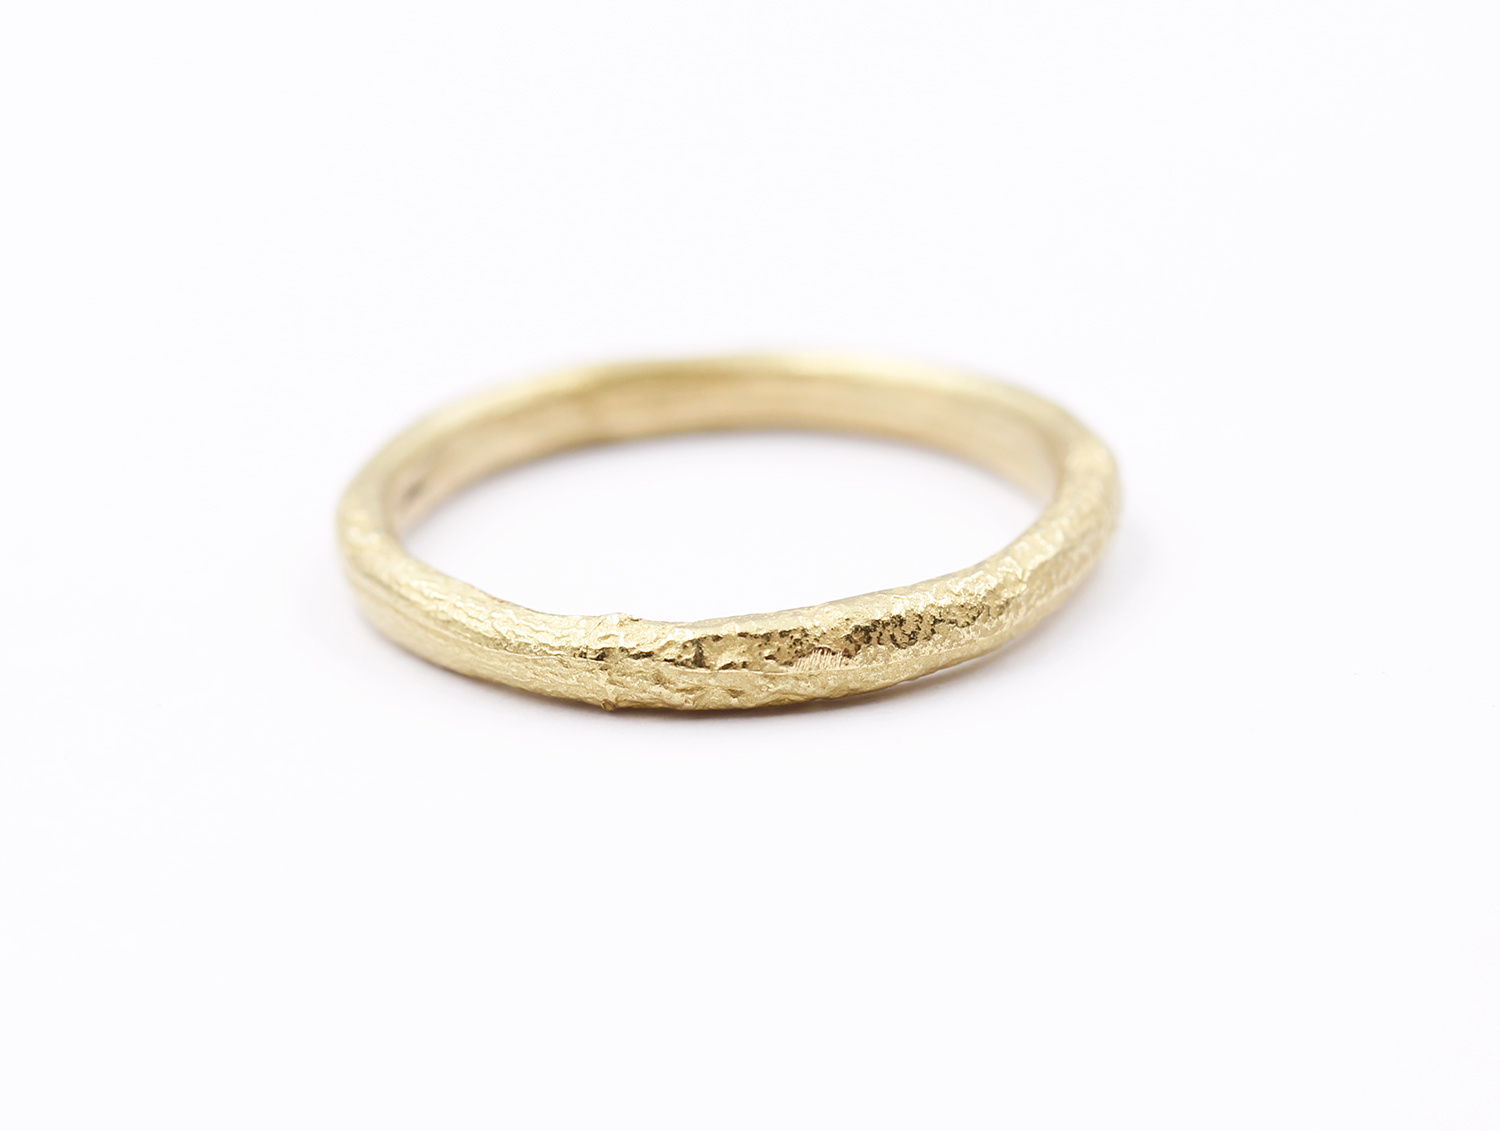 Ring by Sarah Palmer